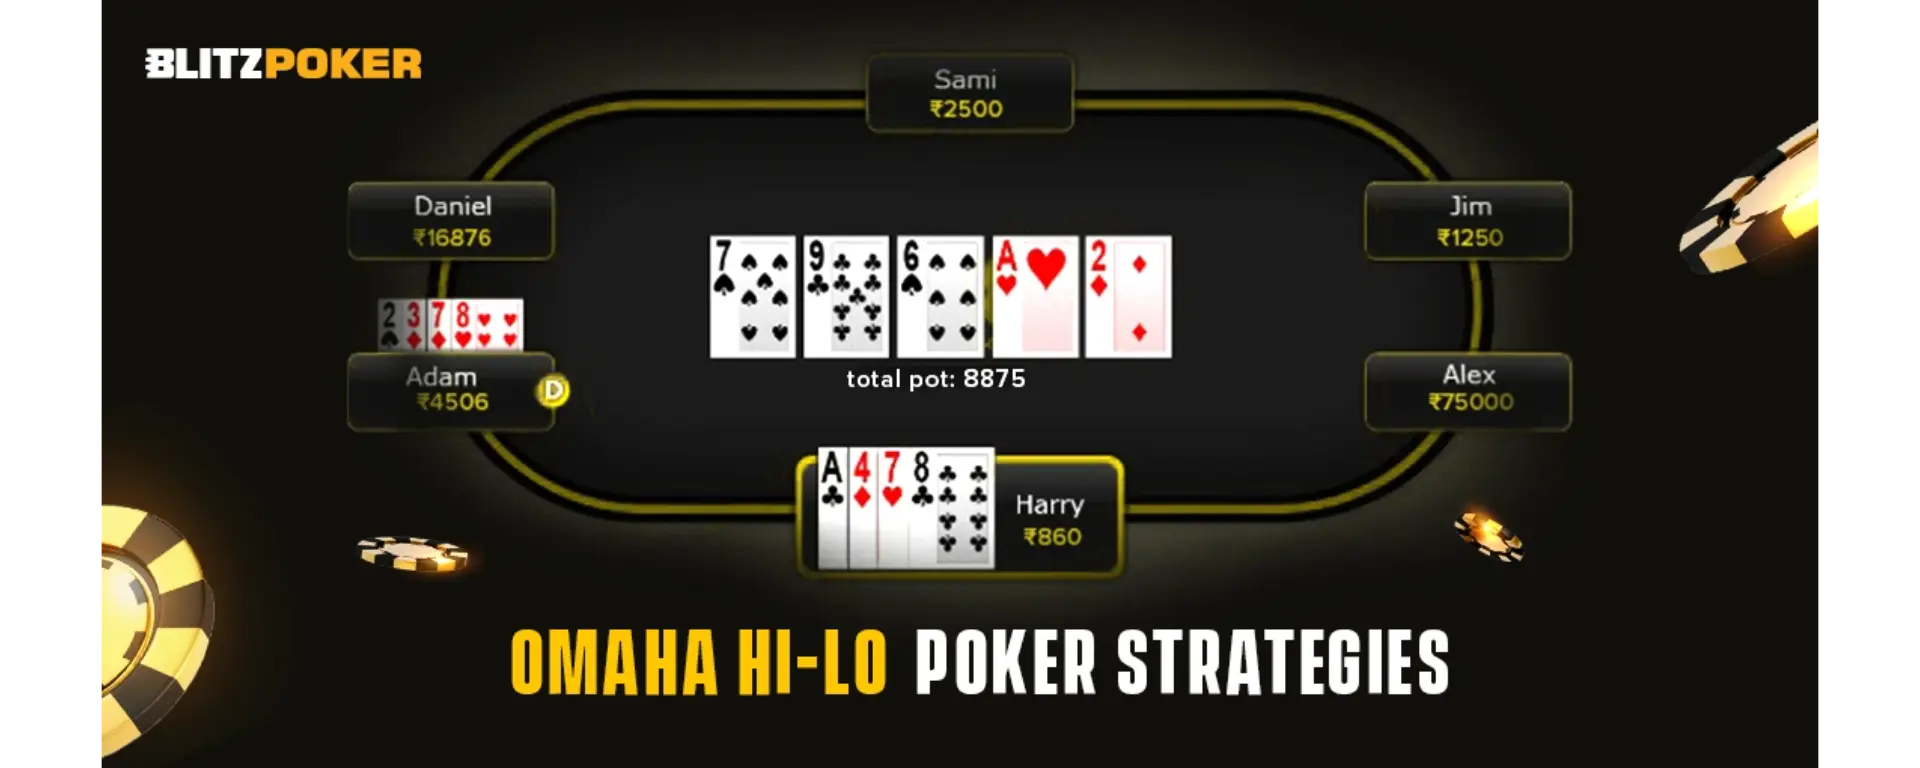 Omaha Hi-lo Poker Strategies